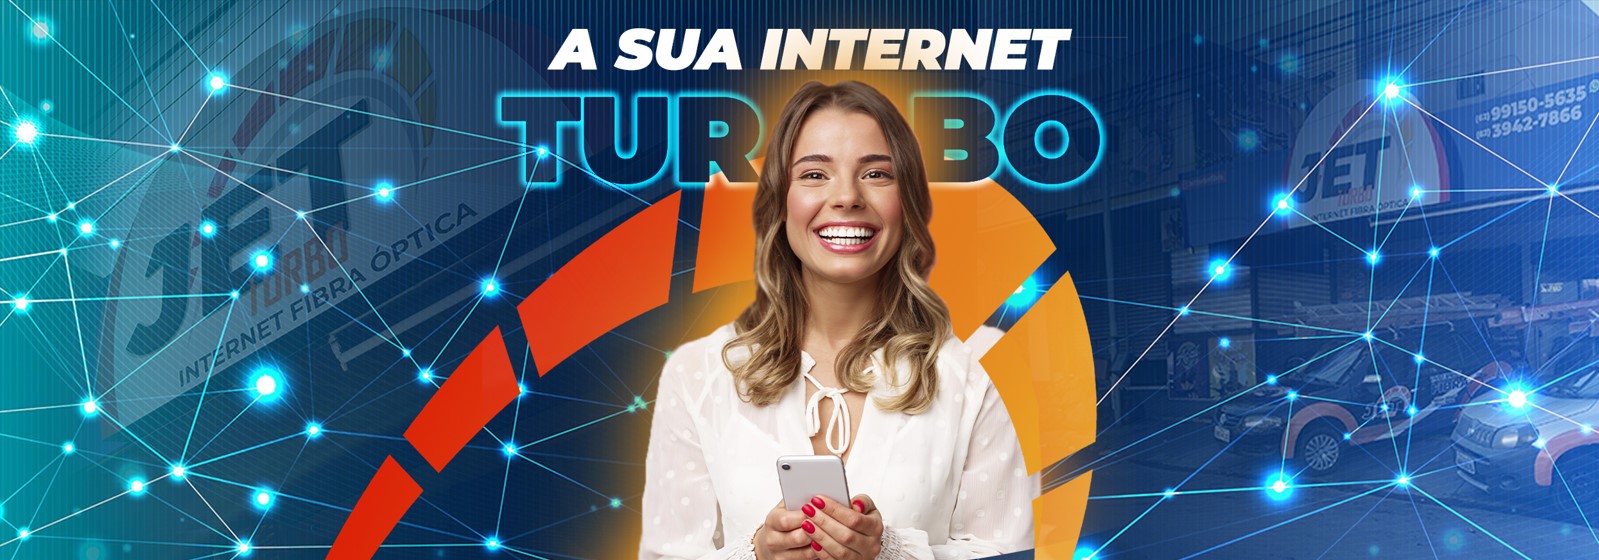 Jet Turbo – Internet Fibra em Goiânia – Jet Turbo